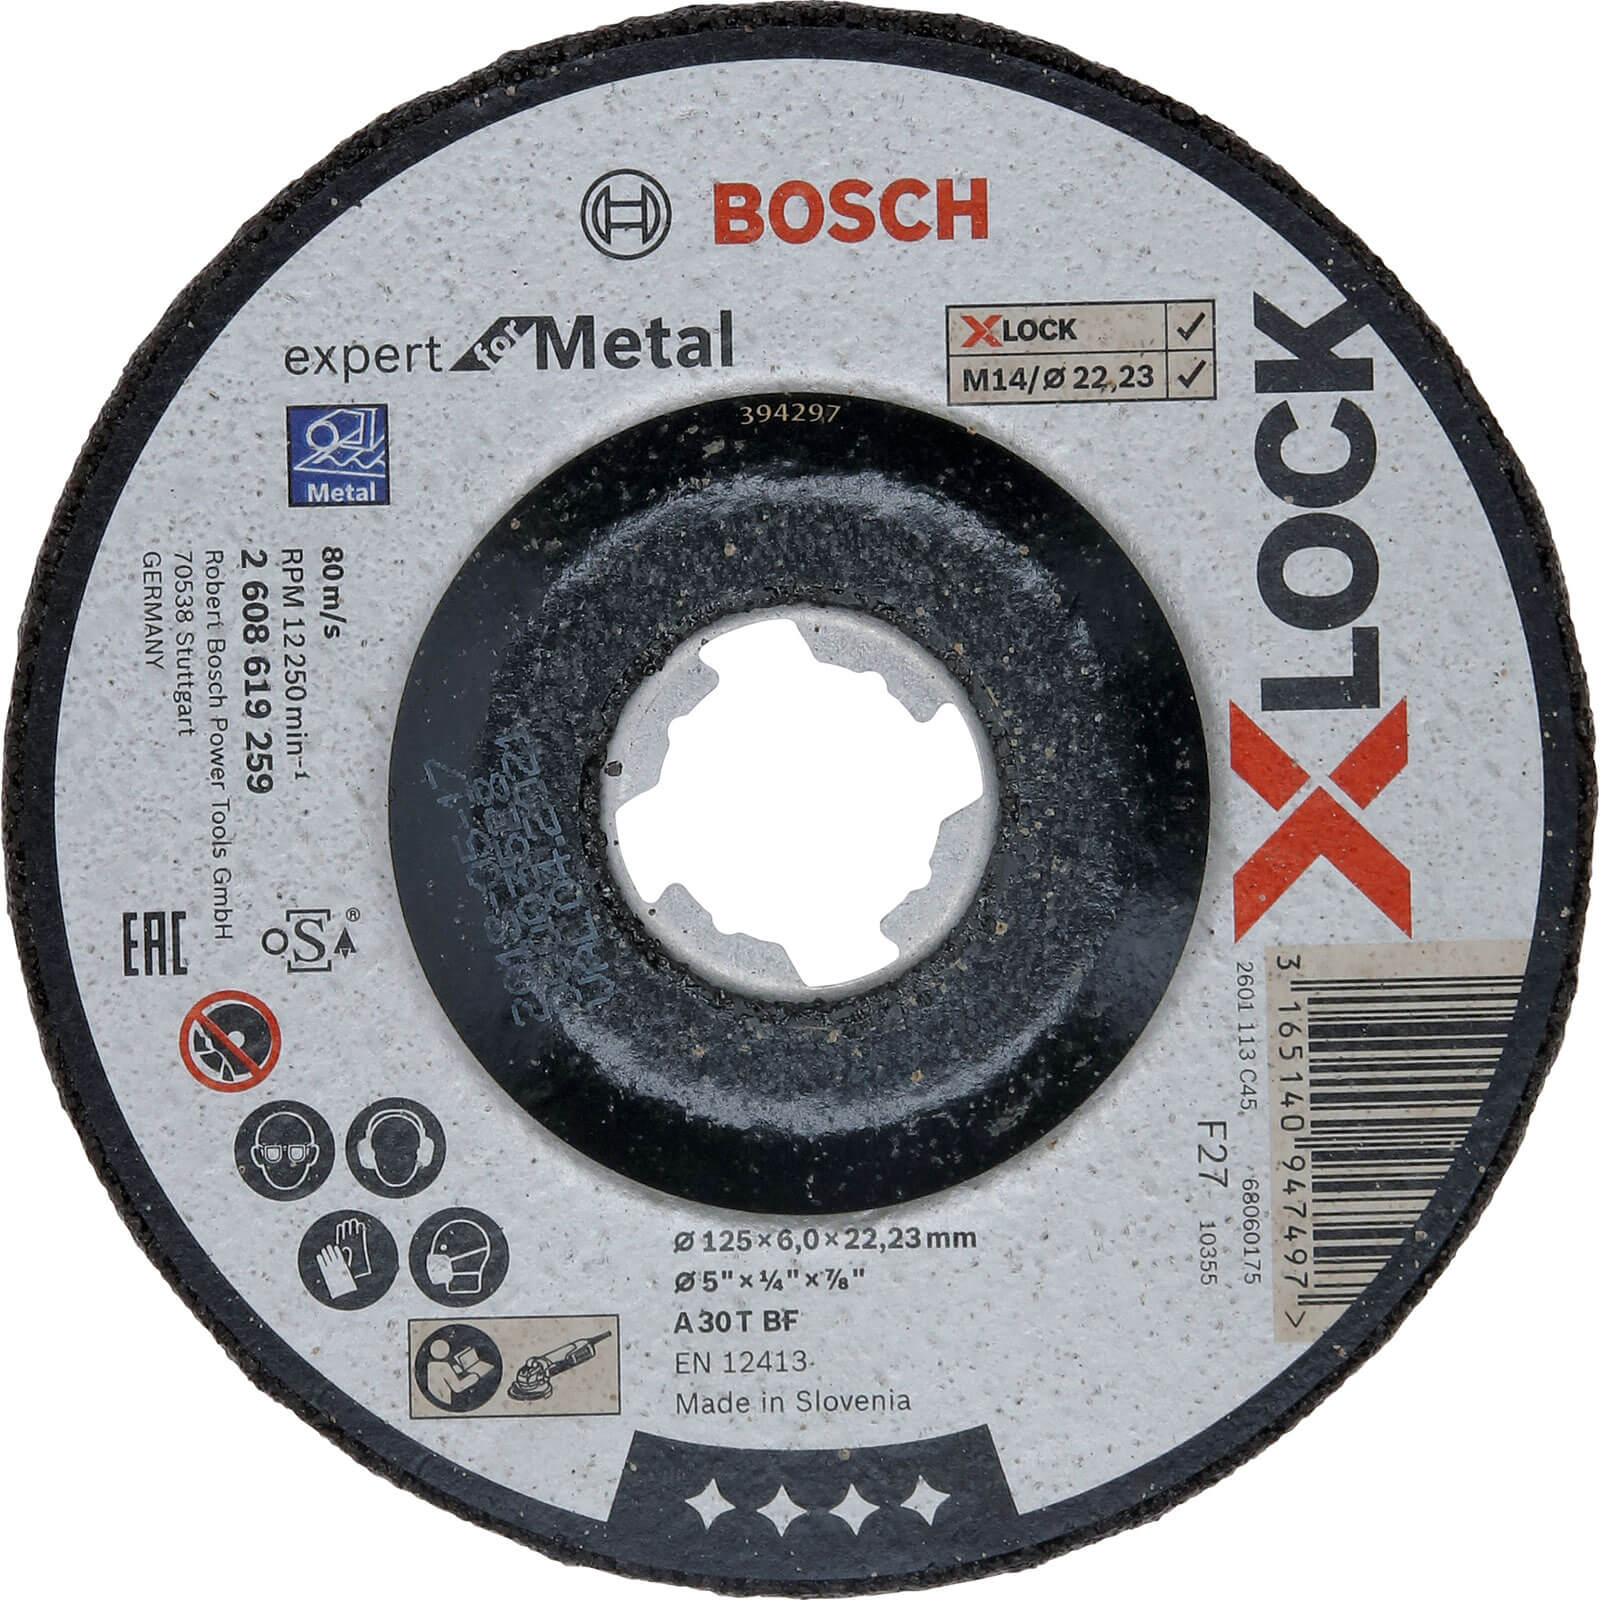 Image of Bosch Expert X Lock Depressed Centre Grinding Disc 125mm 6mm 22mm